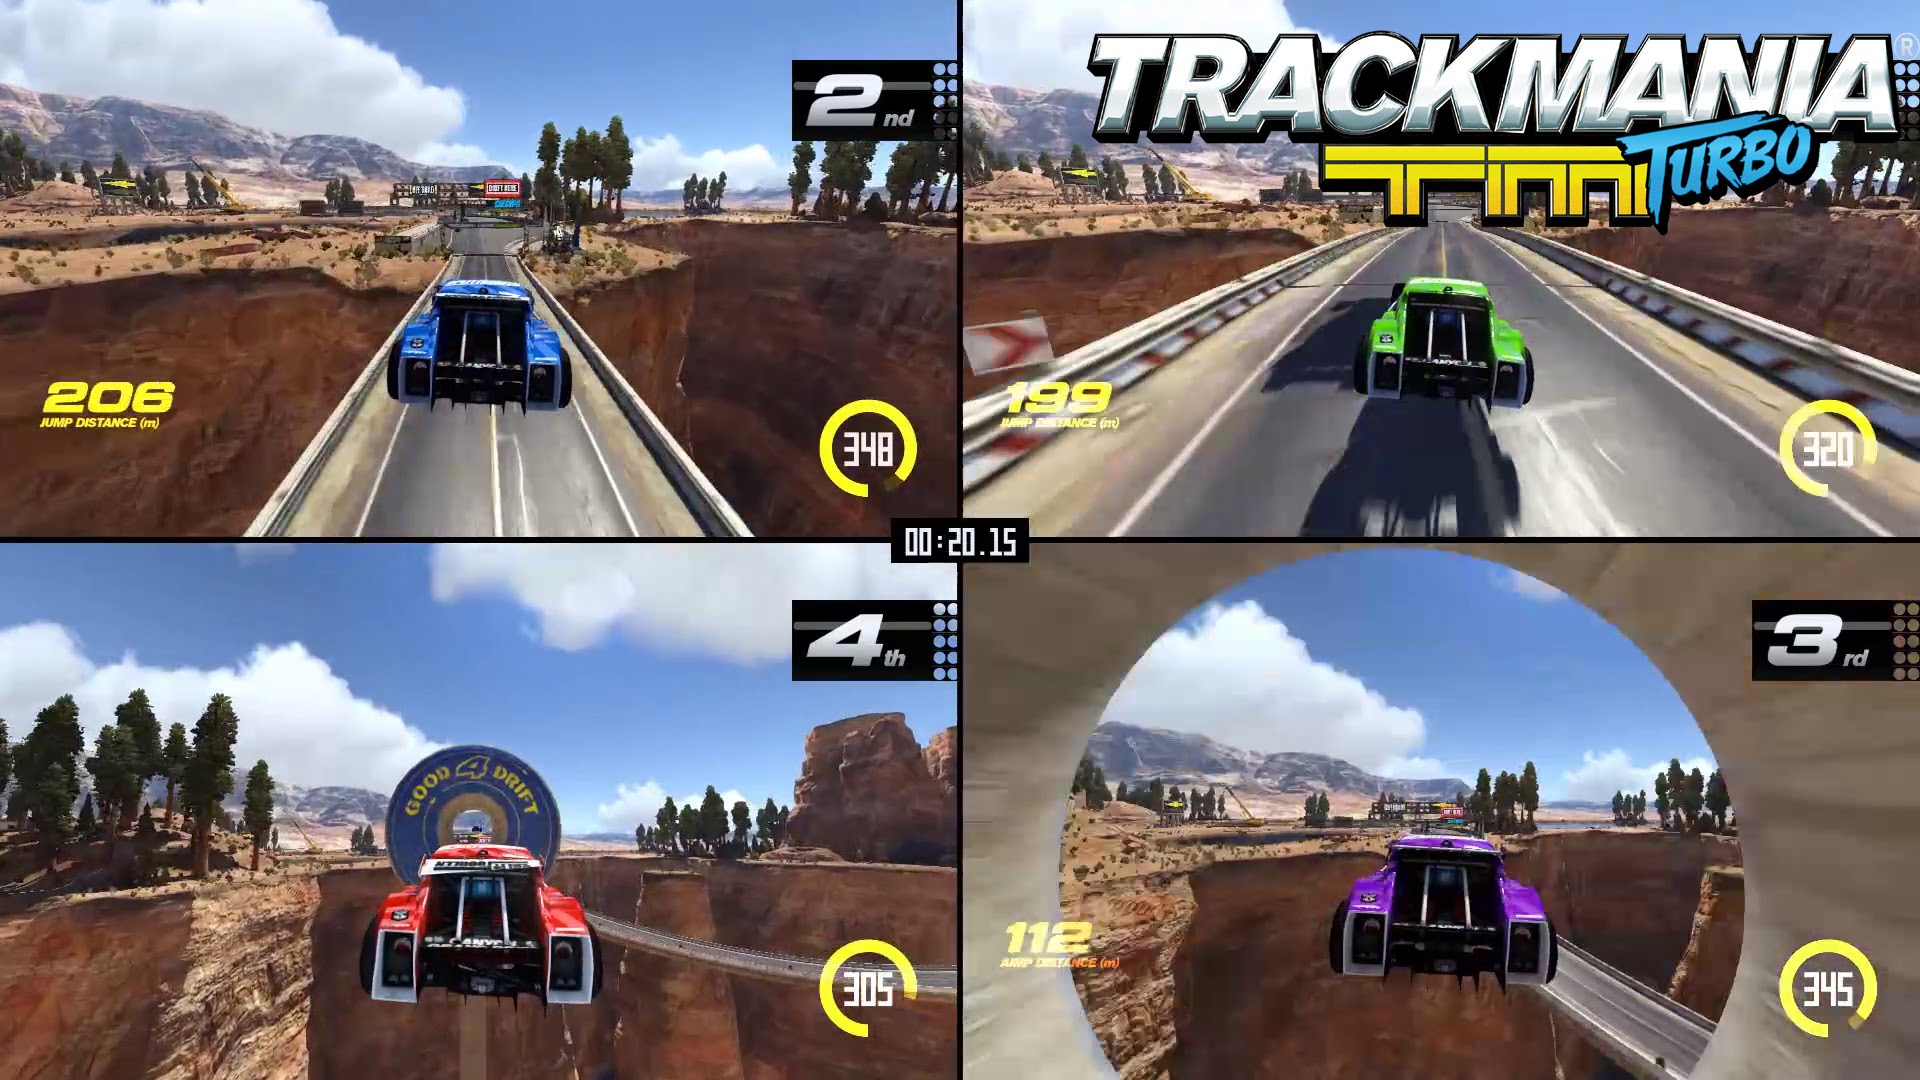 Trackmania Turbo Multiplayer trailer – More drivers, more fun!